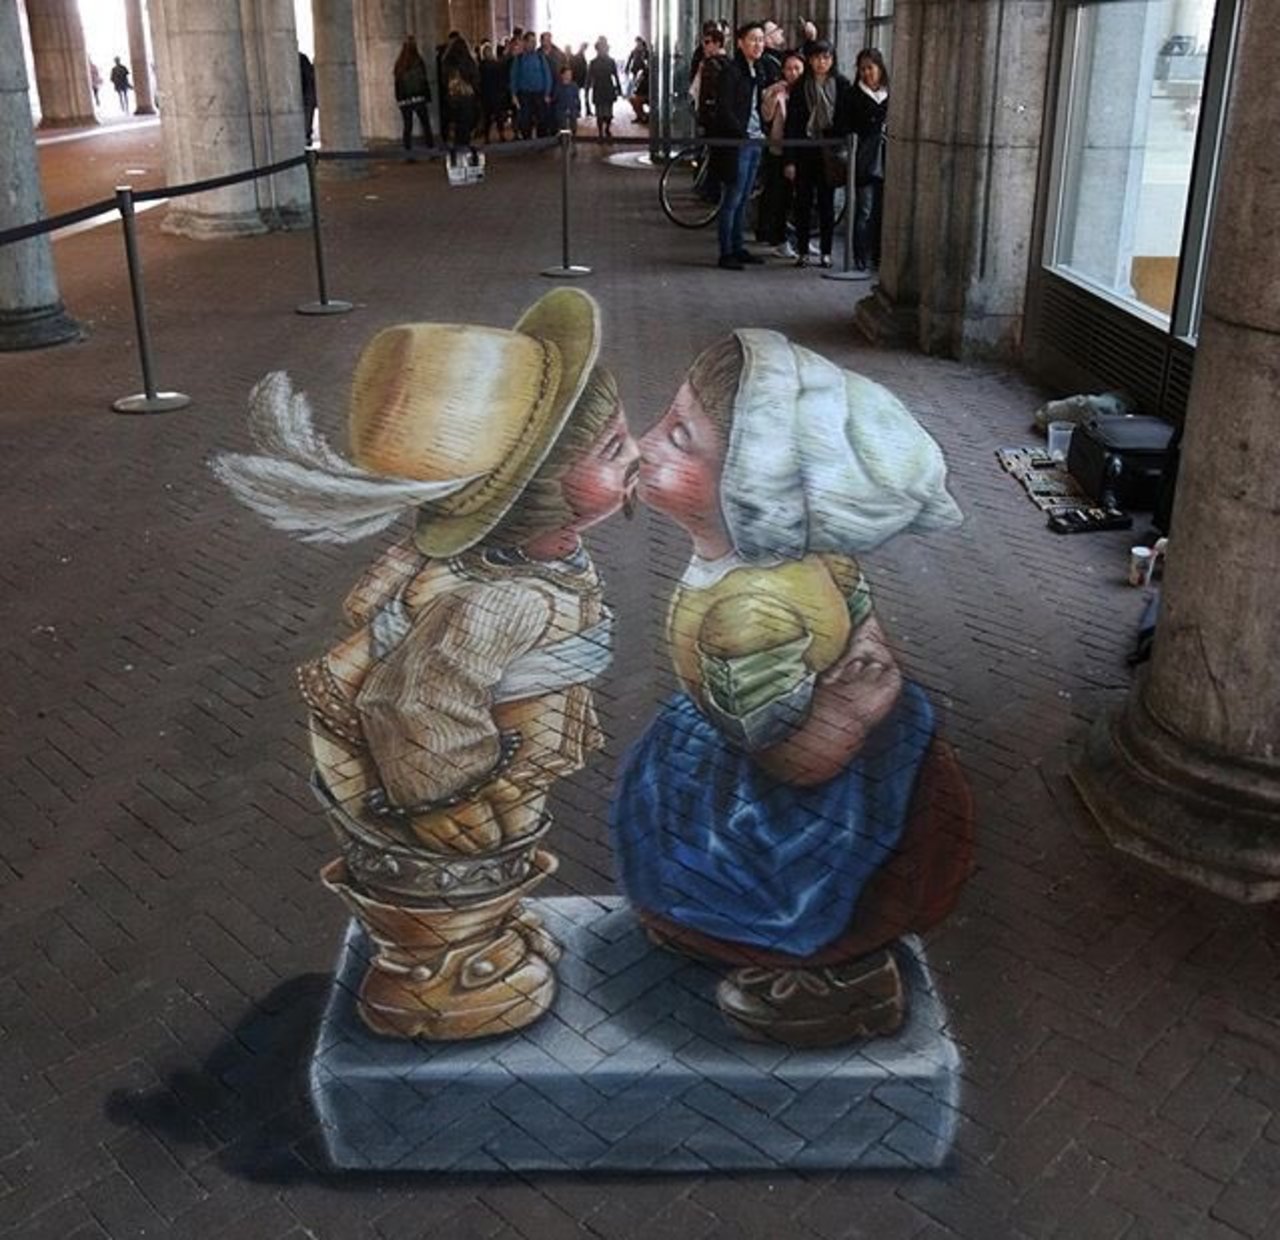 RT Jill0841 Vermeer & Rembrandt meets Anamorphic 3D Street Art by Leon Keer 

#art #mural #graffiti #streetart https://t.co/17hjiBdiWs